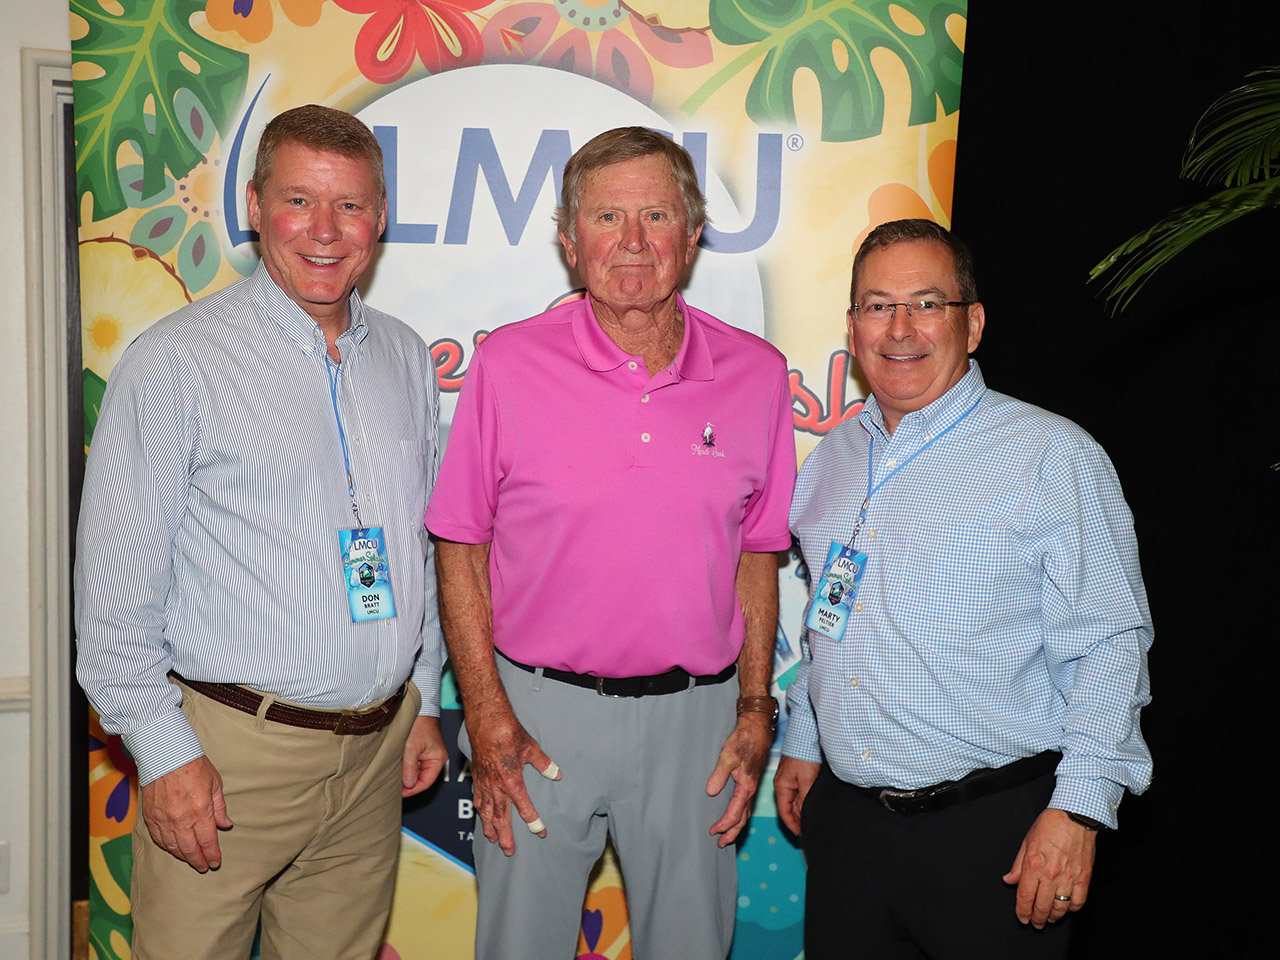 LMCU executives Don Bratt and Marty Peltier with Coach Steve Spurrier